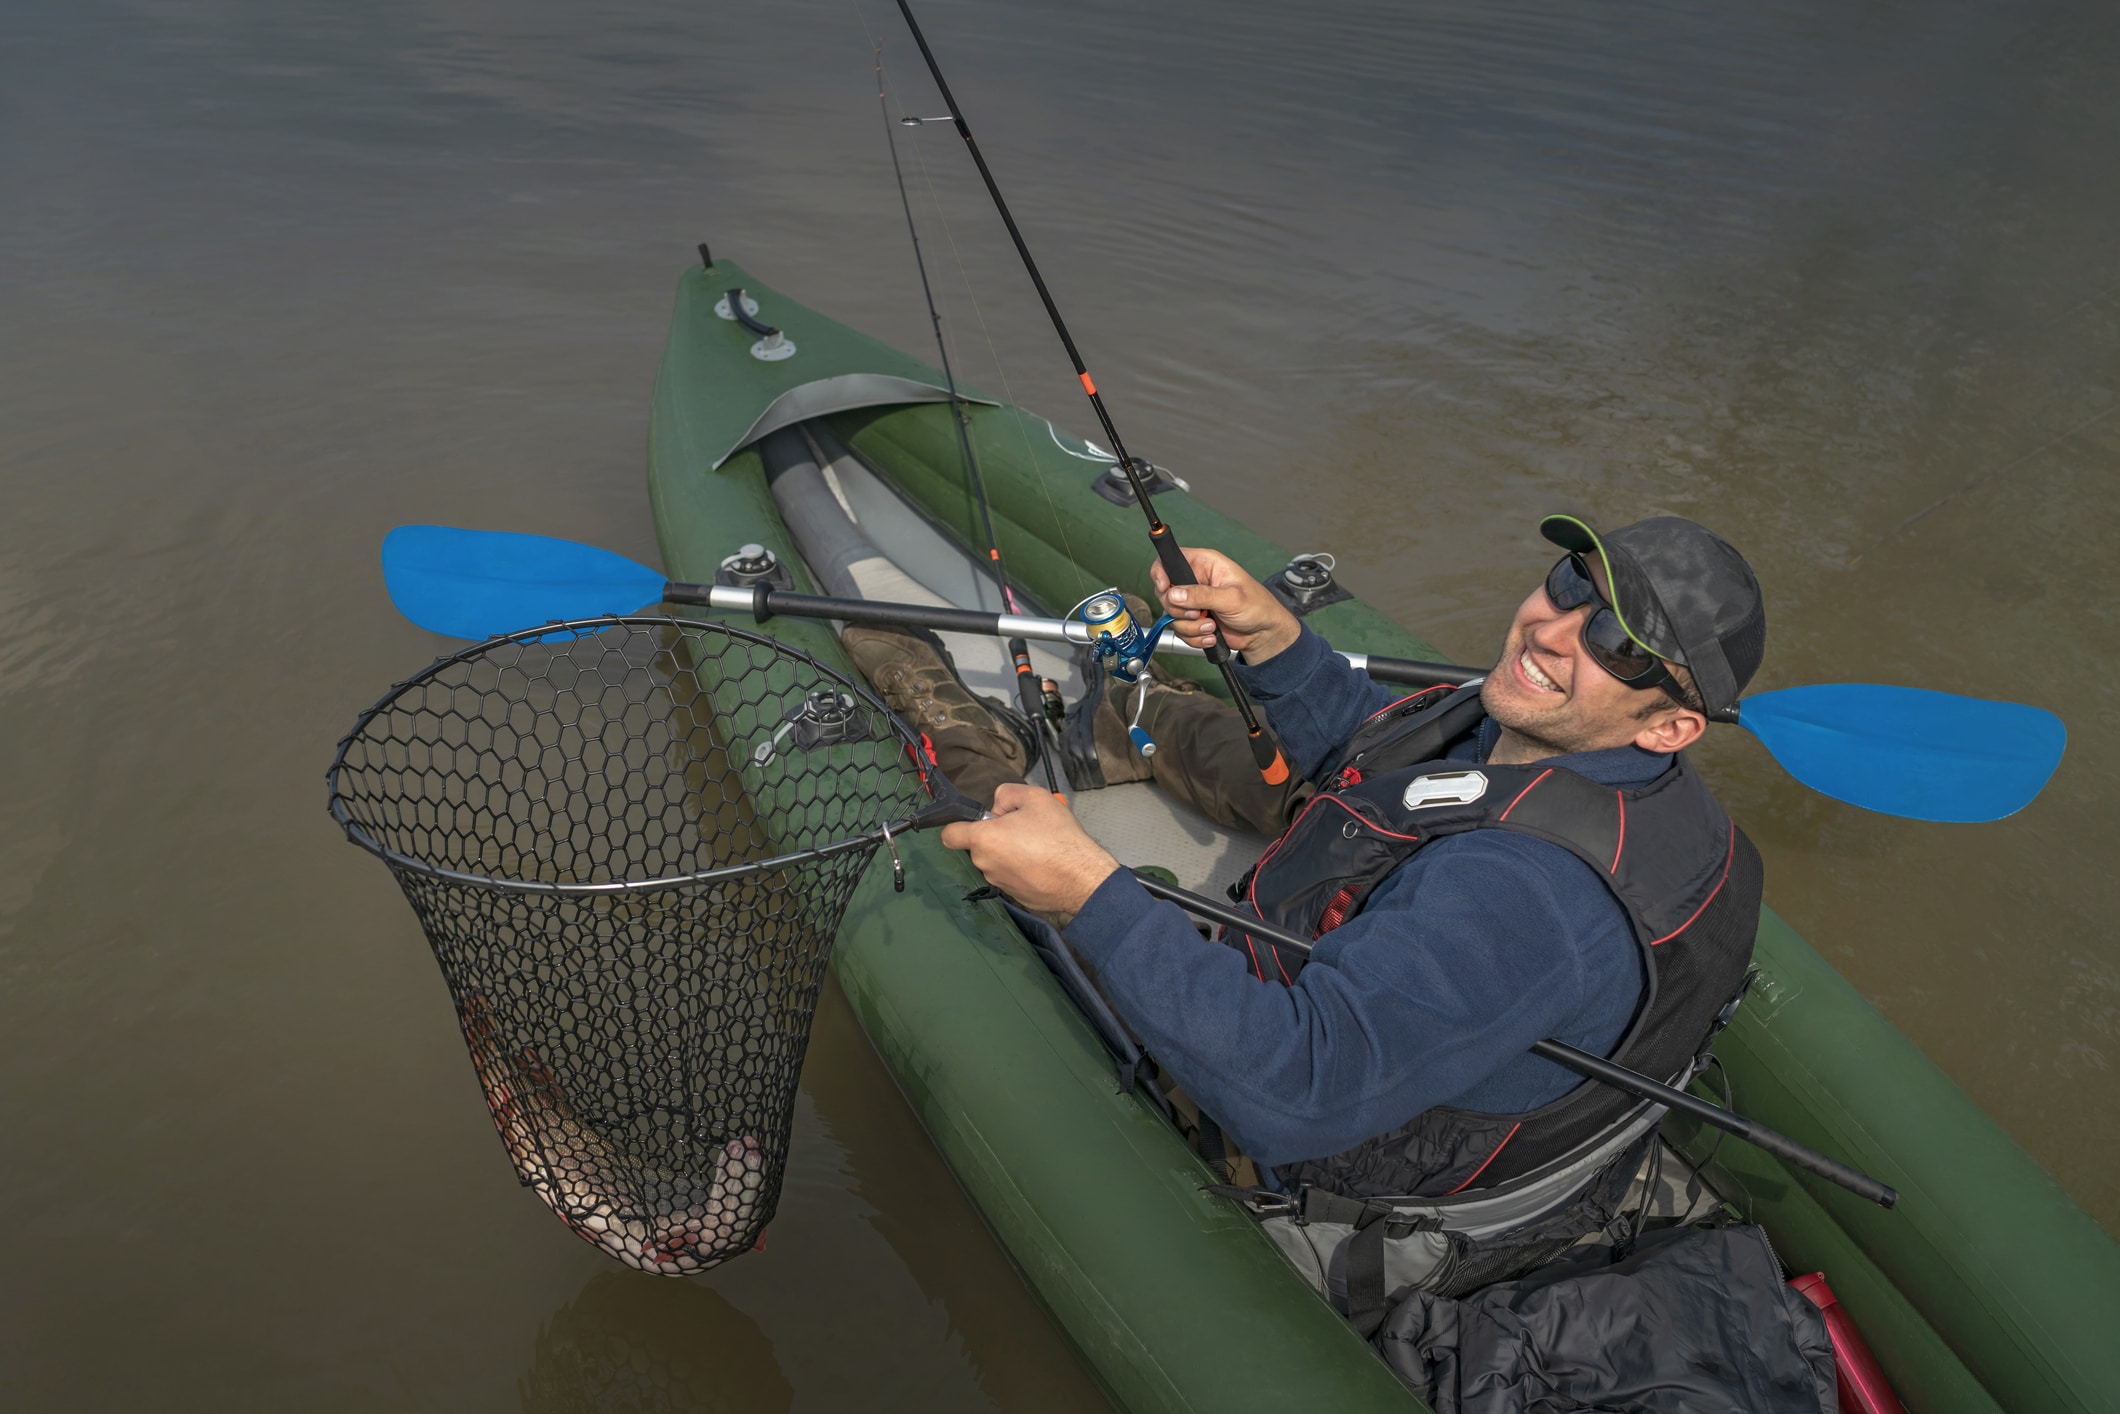 Kayak fishing at lake. Fisheraman caught pike fish on inflatable boat with fishing tackle.